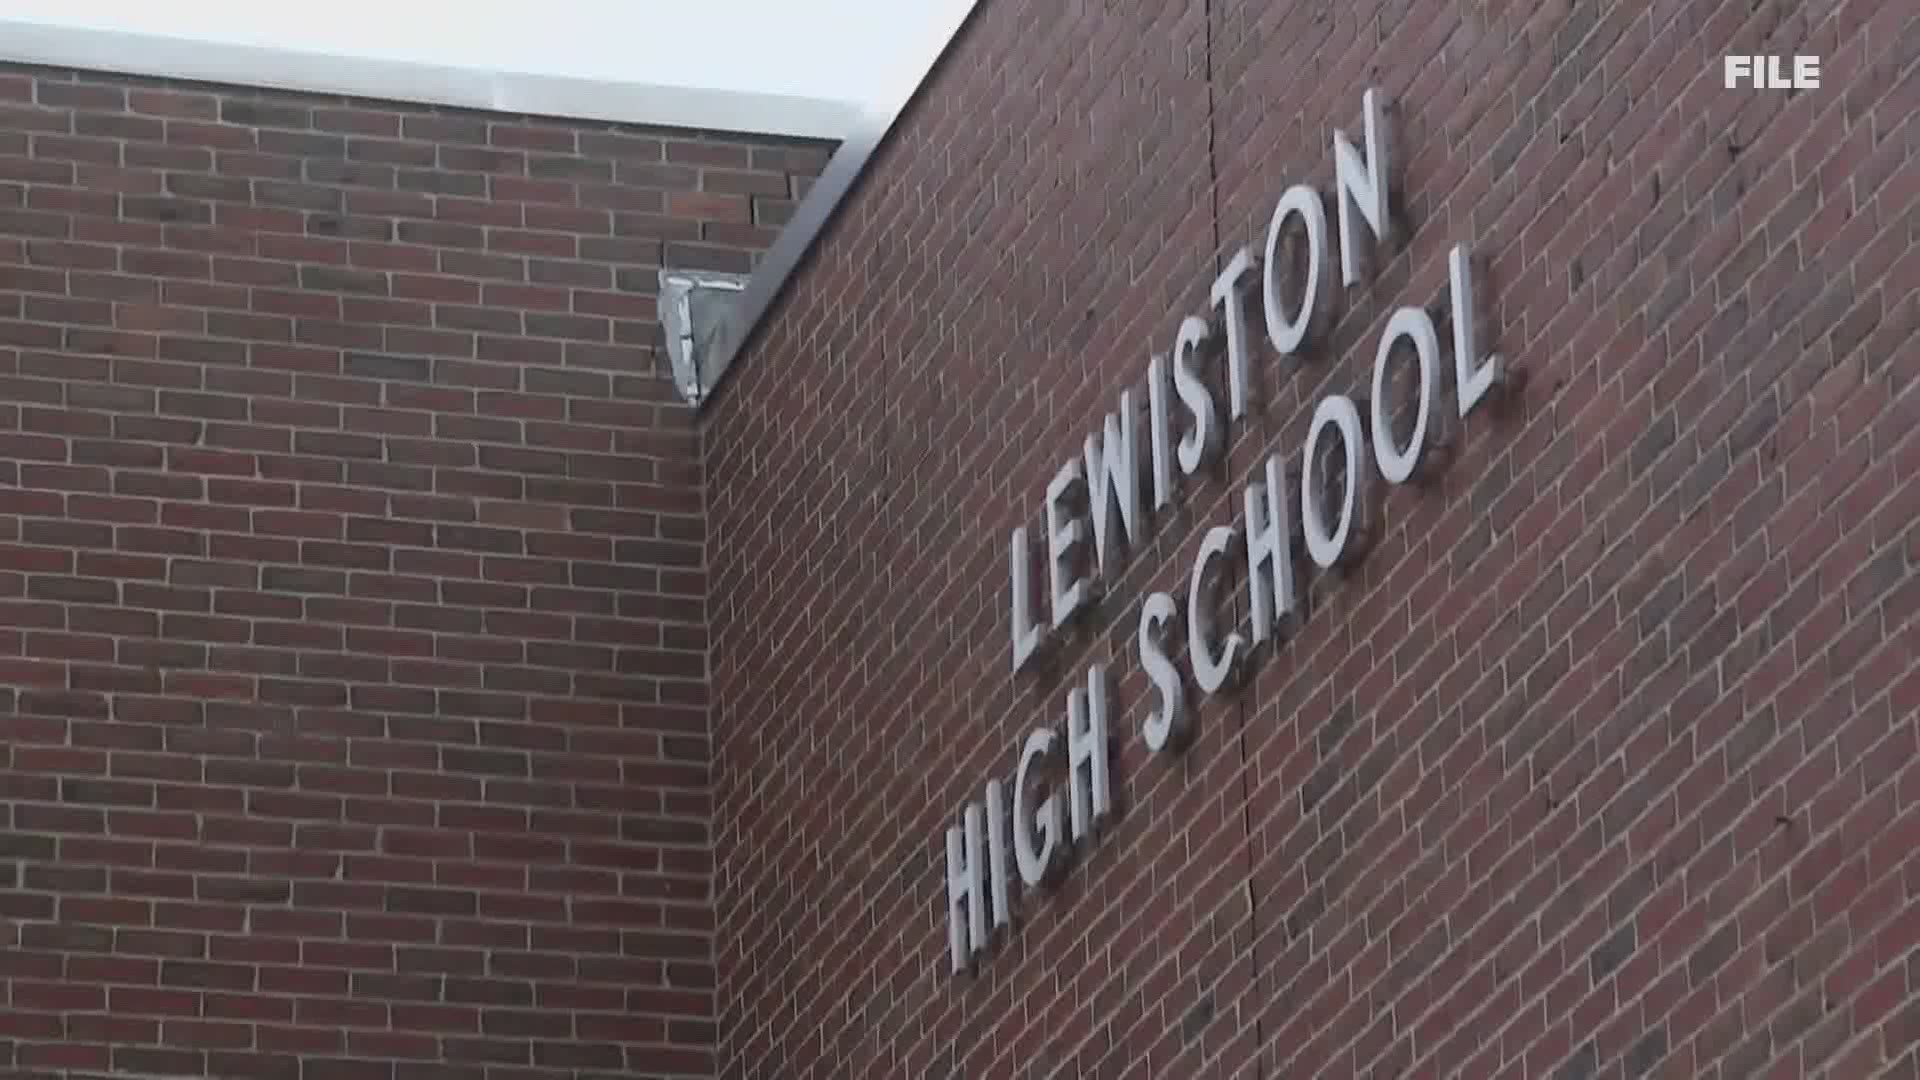 Lewiston's teacher's union is pushing back on the hybrid model.